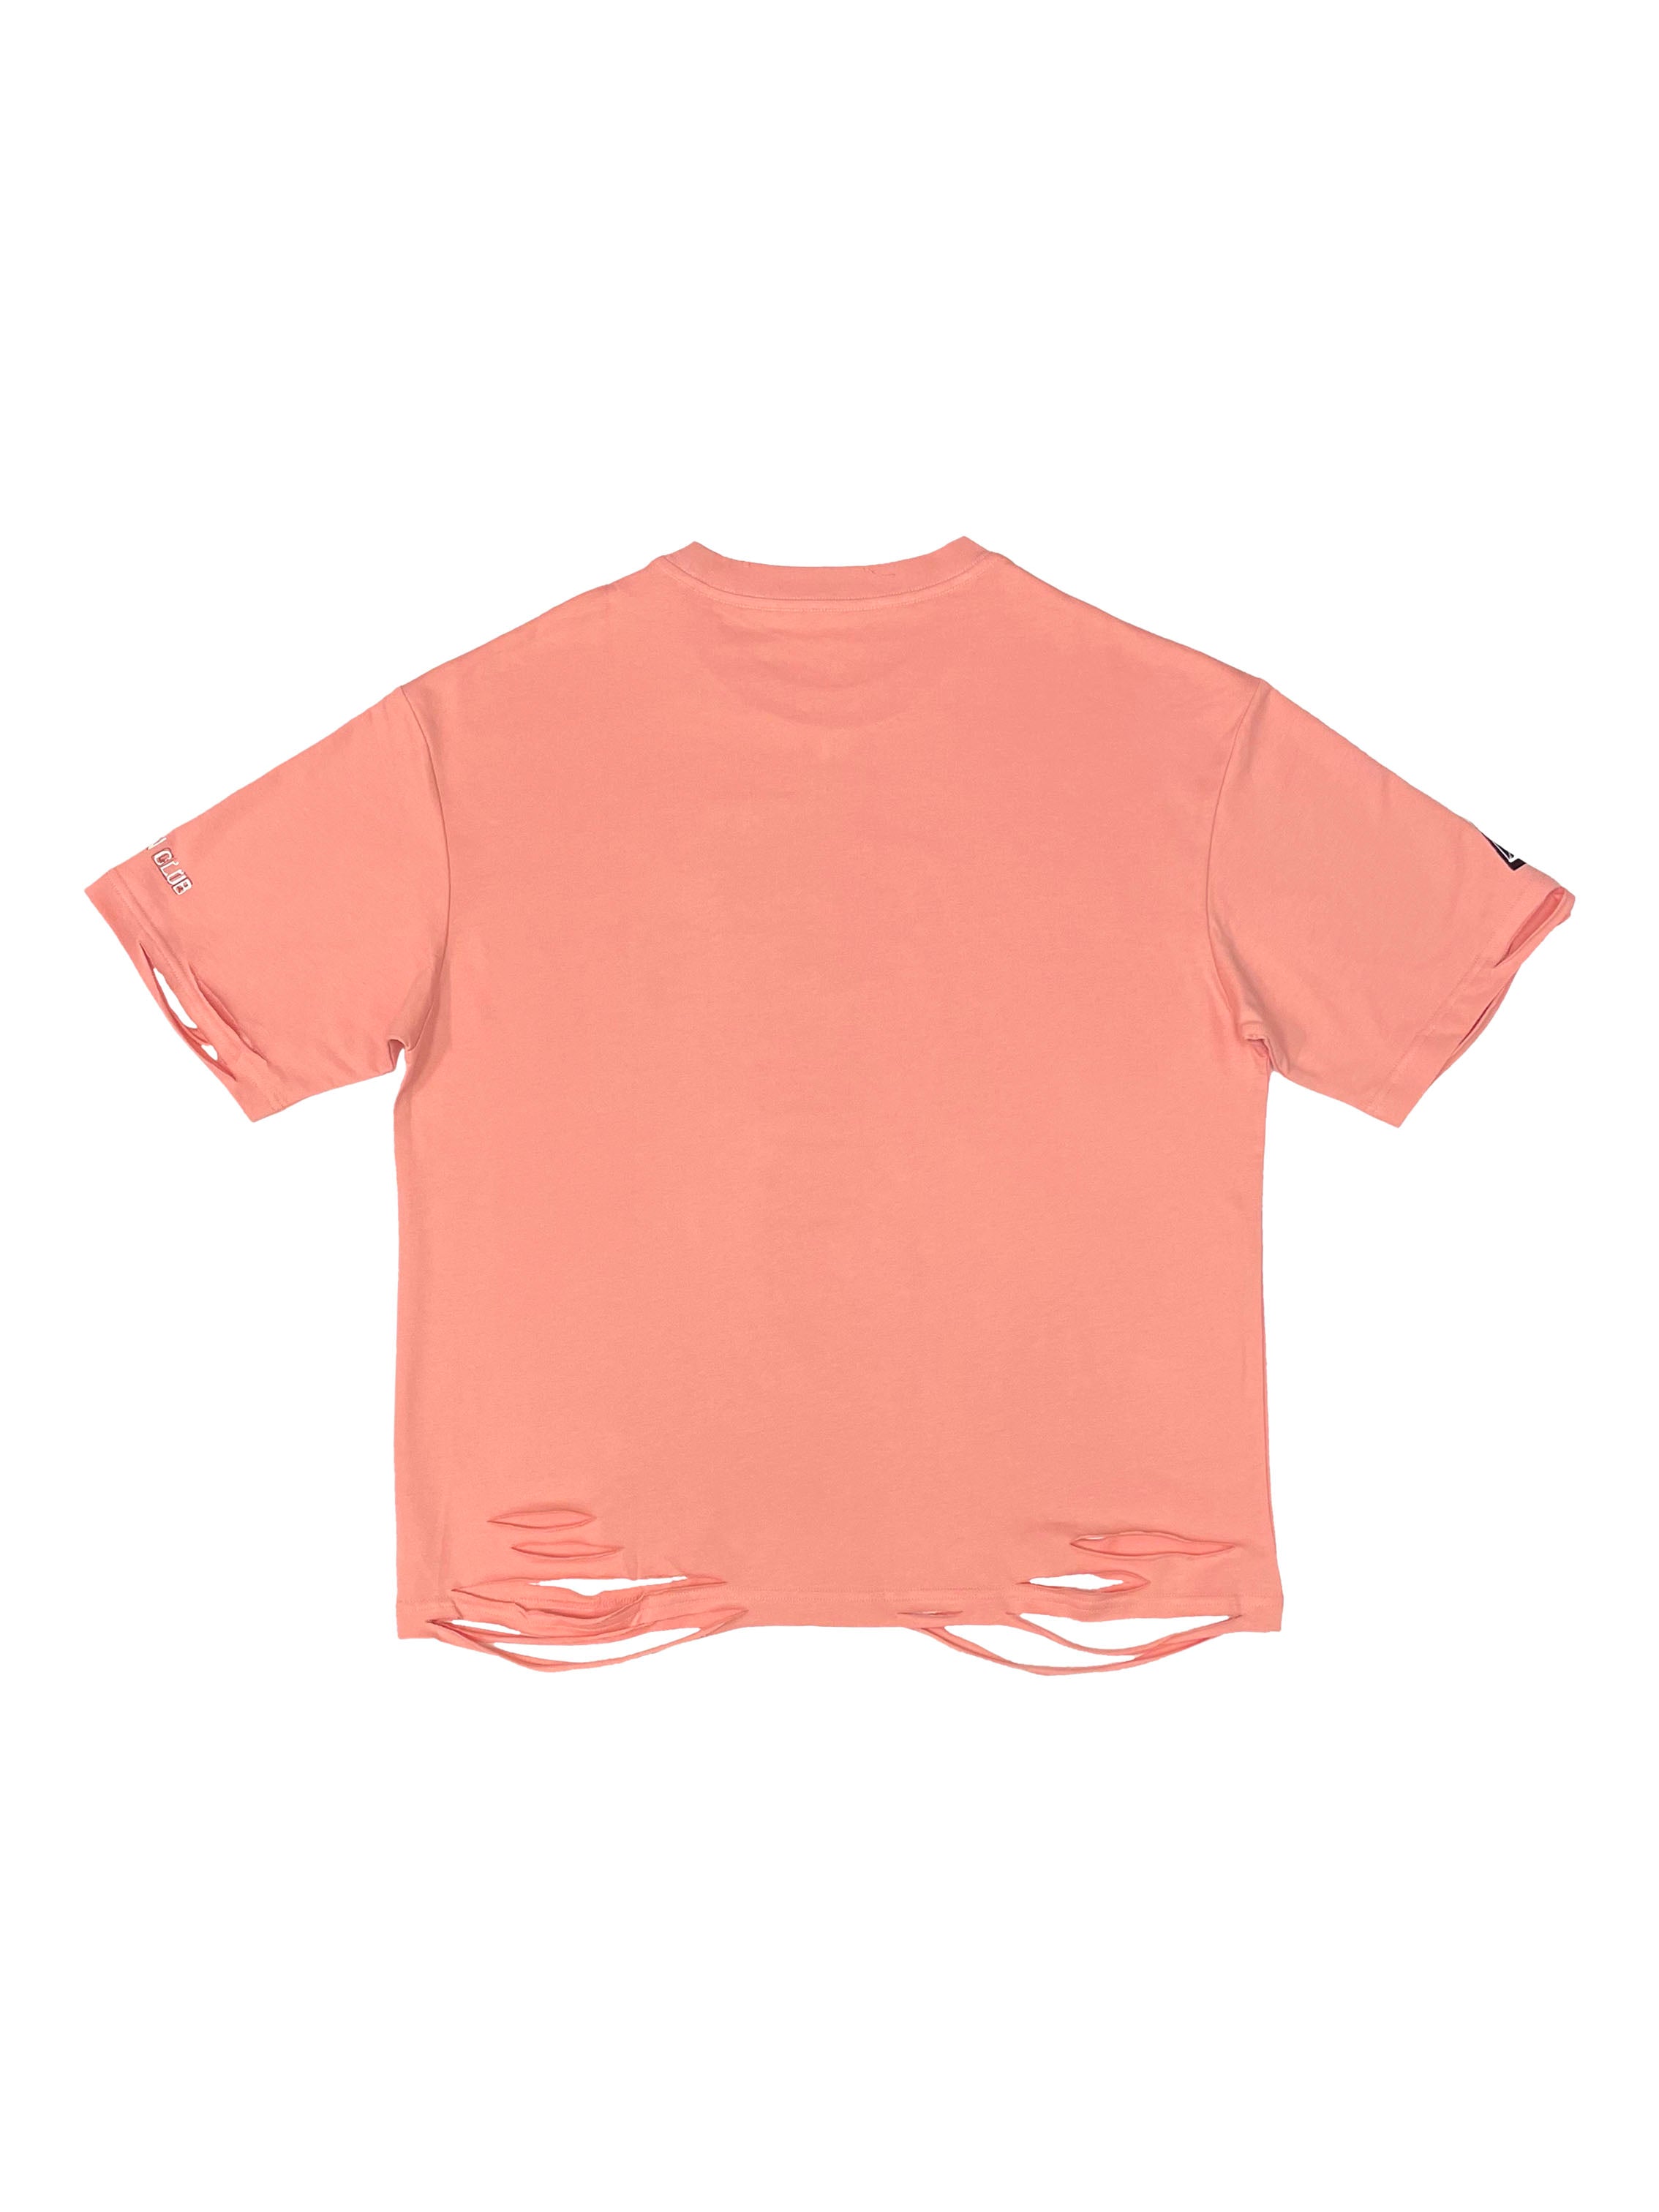 Chrysalis Tshirt (Salmon Pink)